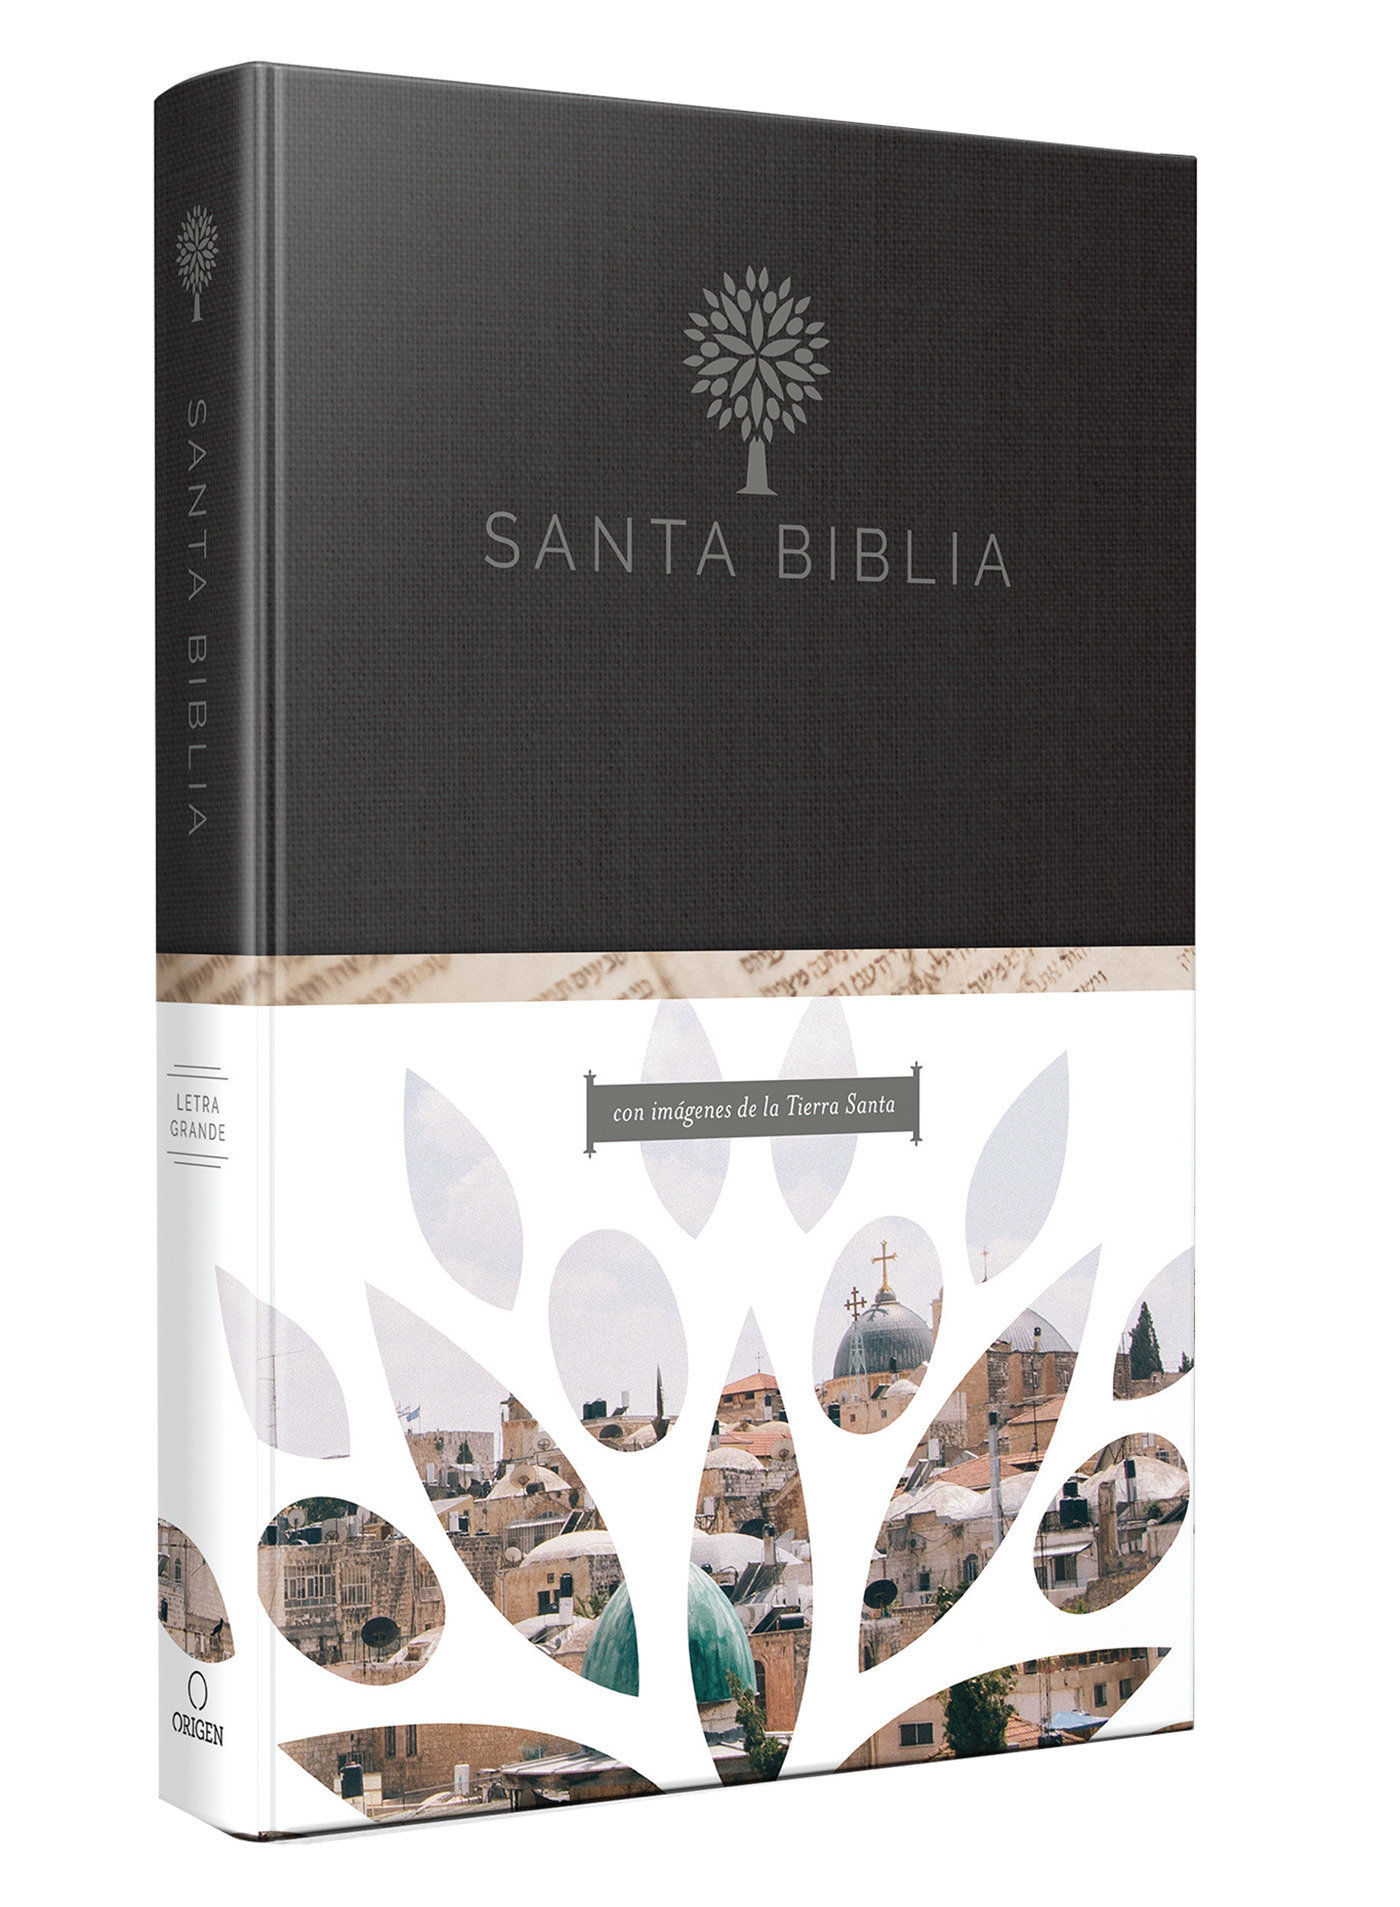 Biblia Reina Valera 1960 Tamaño Grande, Letra Grande. Tapa Dura / Rvr 1960 Holy Bible In Spanish. Large Size, Large Print, Hard Cover. (Hardcover Book)